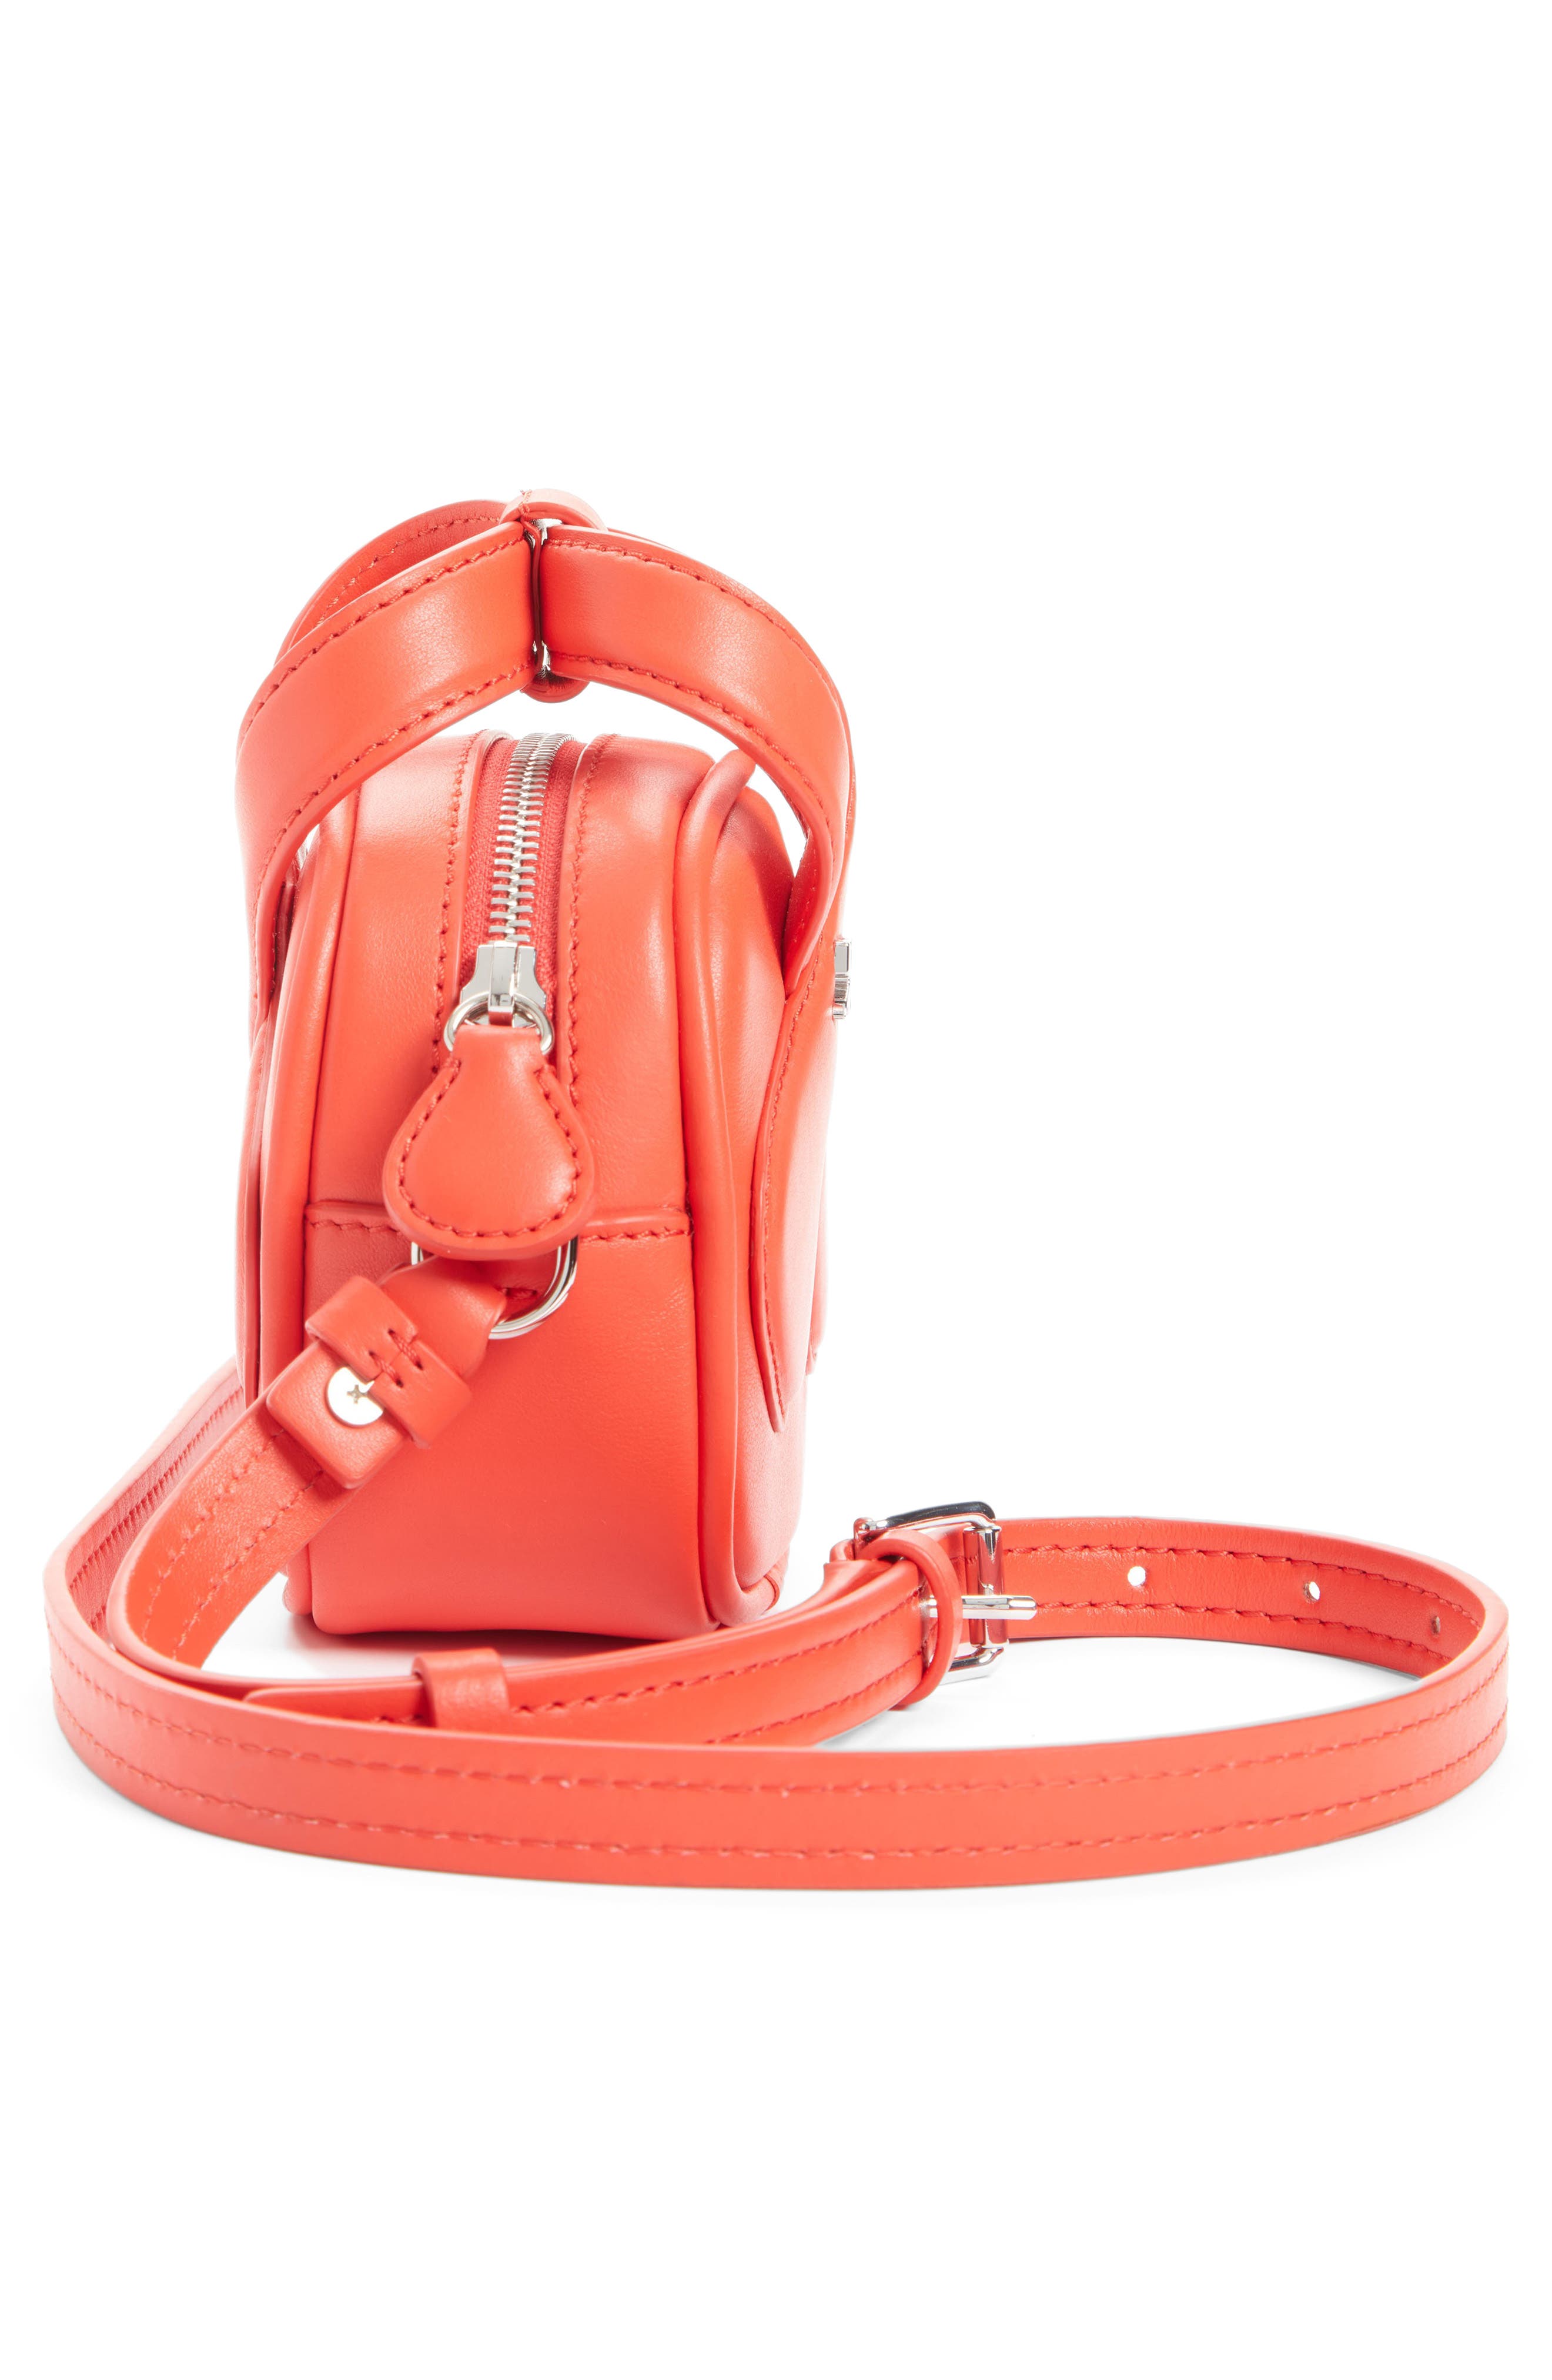 Courreges Mini Loop Bag in Red